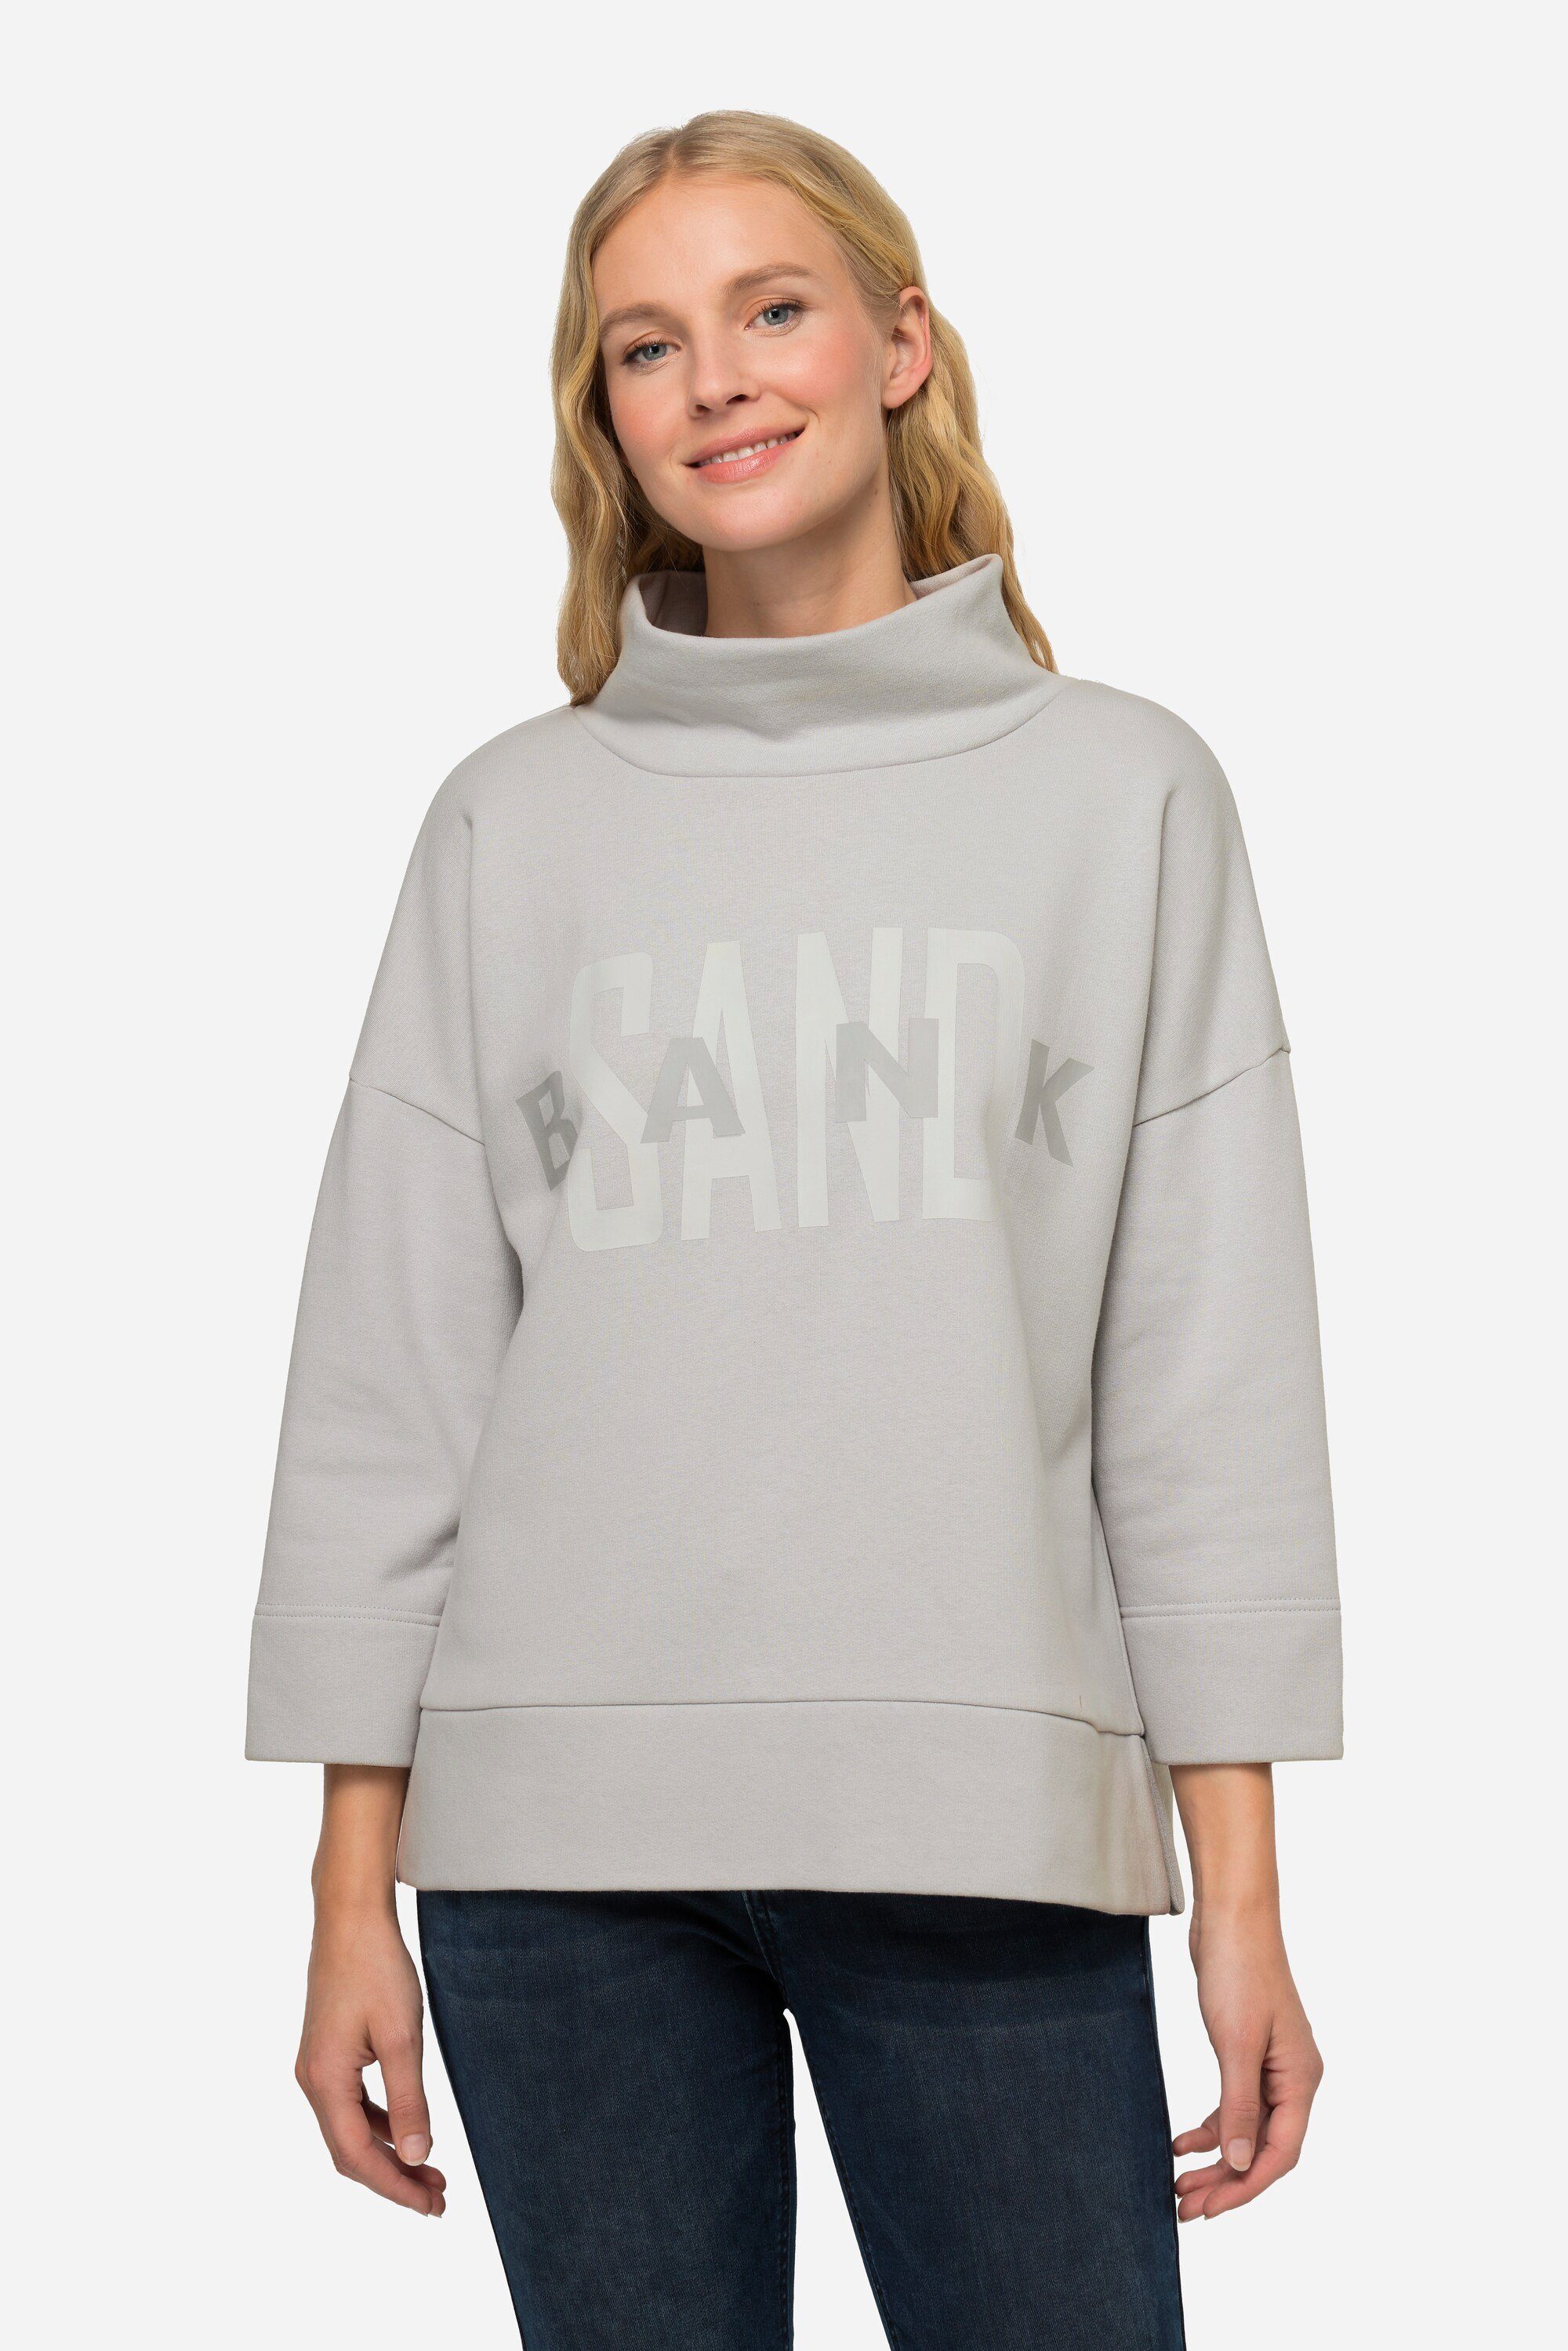 Laurasøn Sweatshirt Sweatshirt oversized SANDBANK-Druck Stehkragen | Sweatshirts